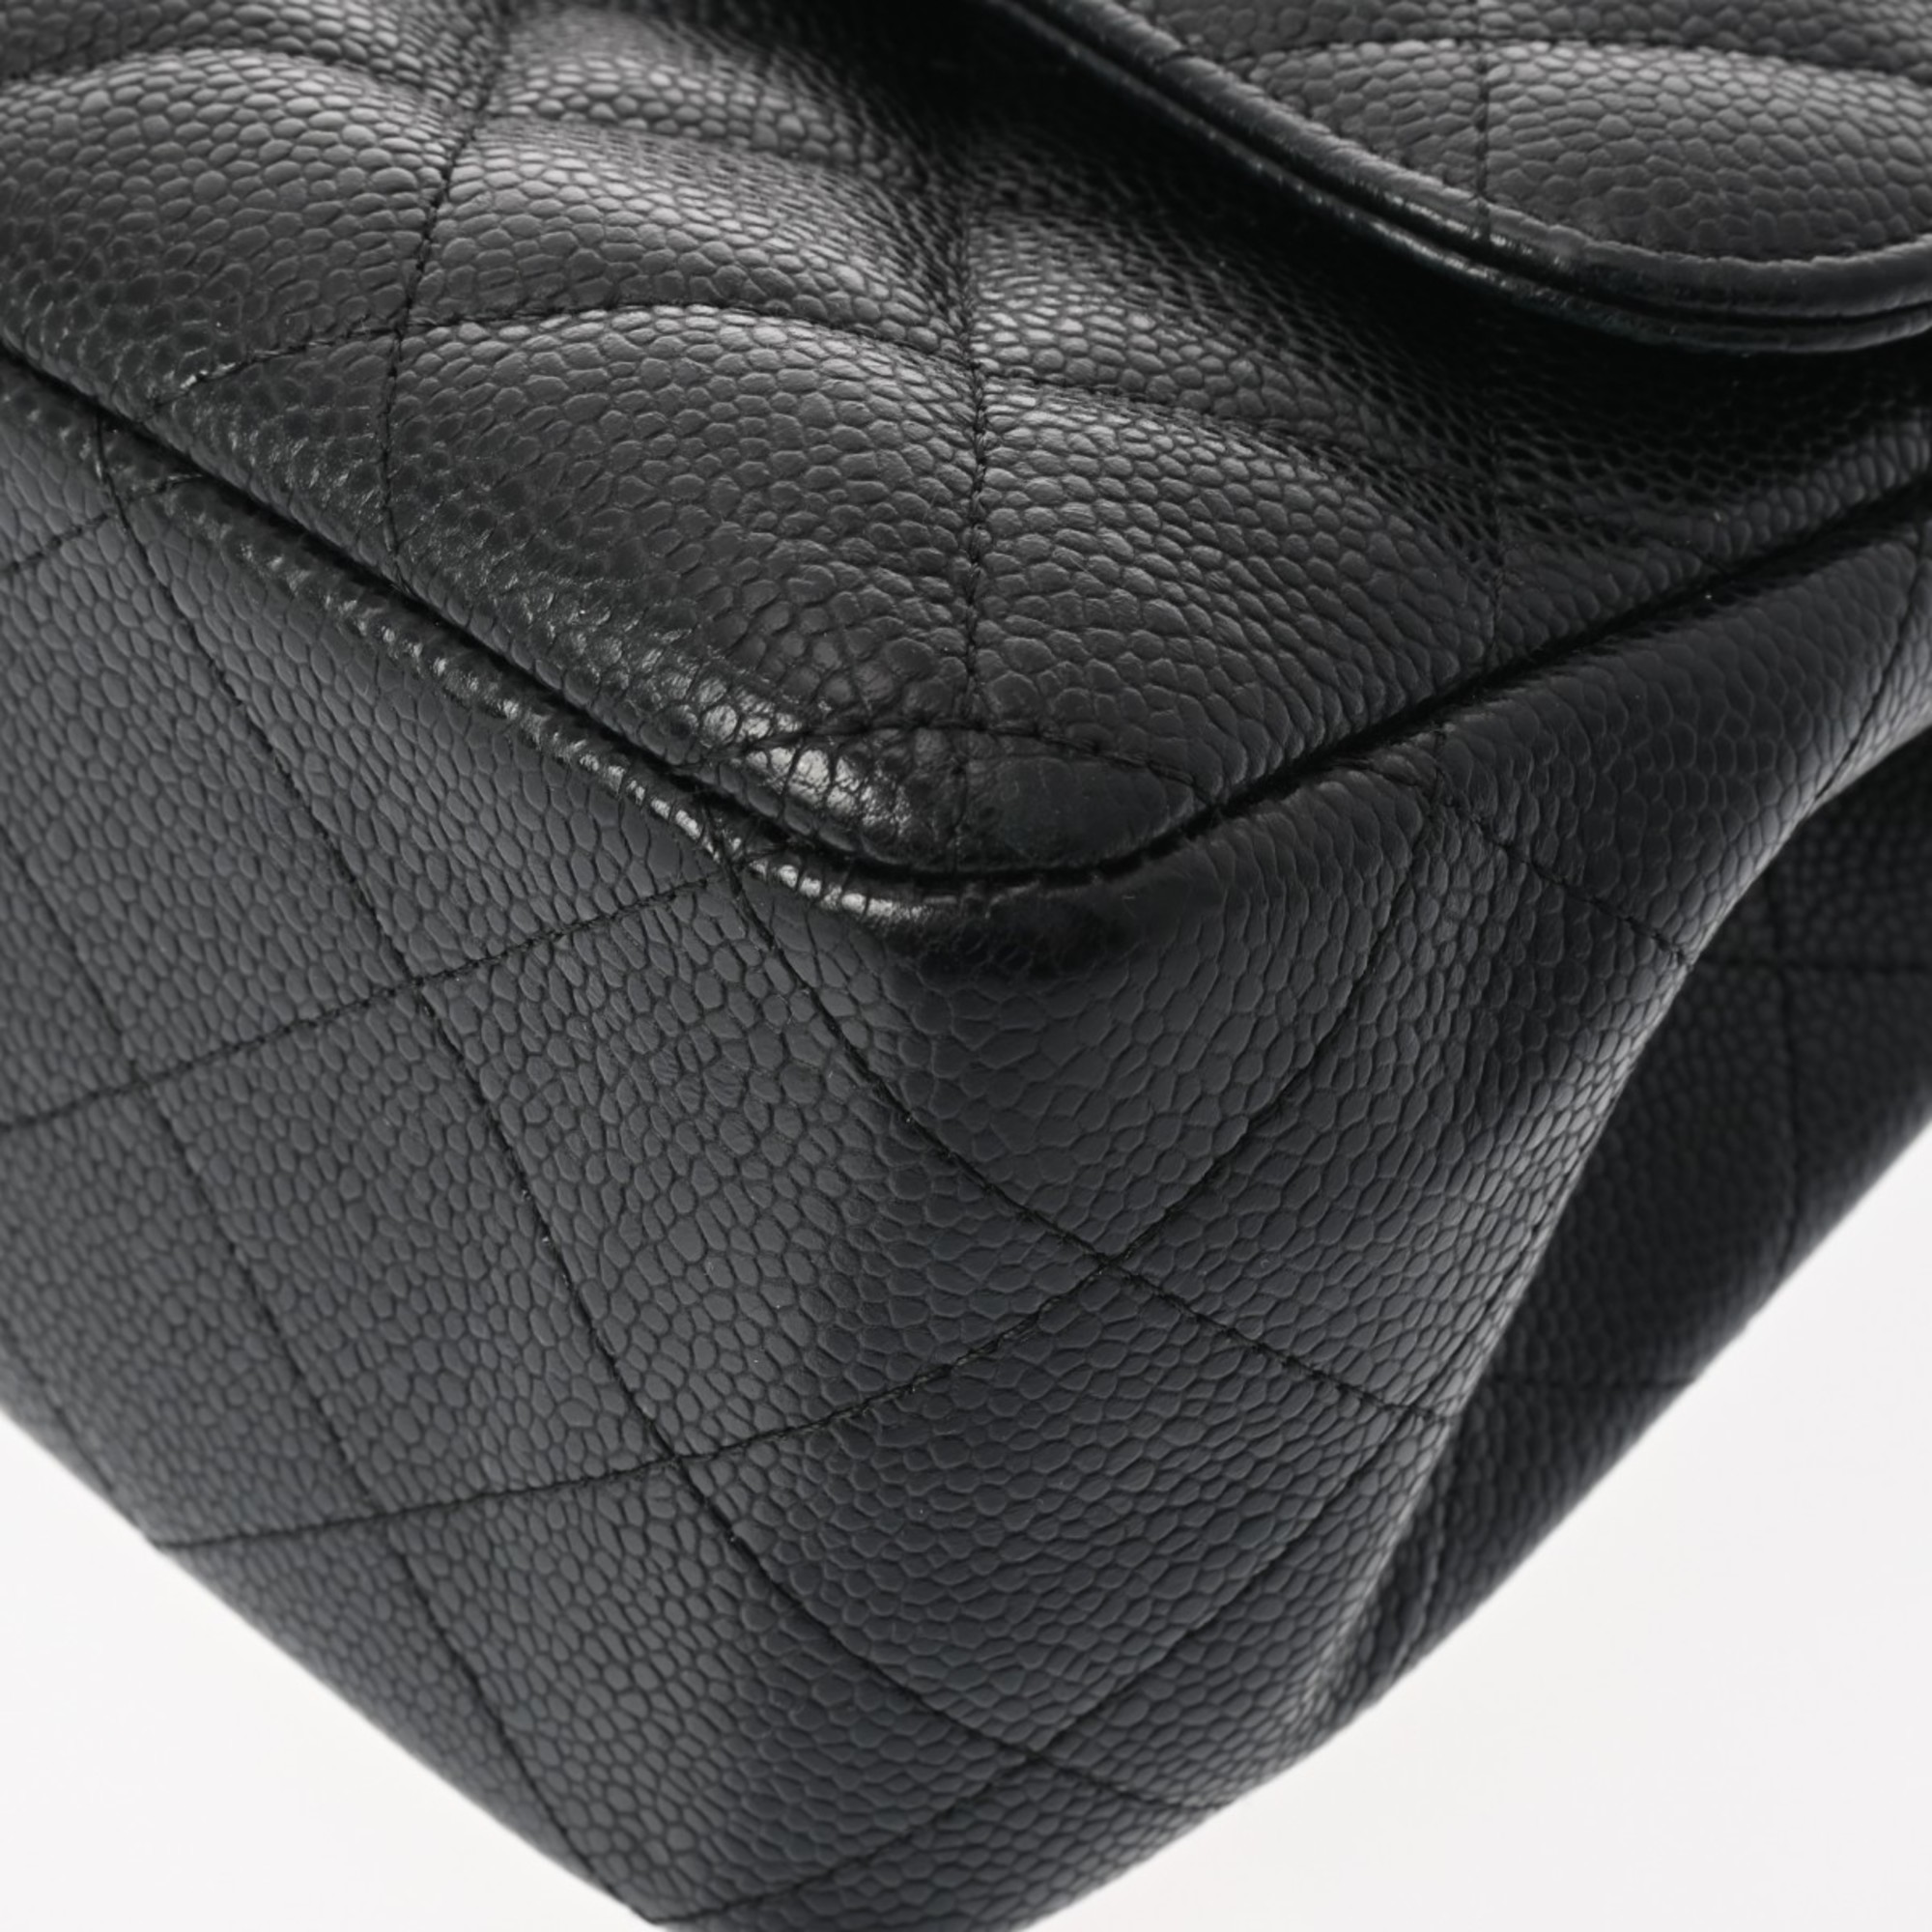 CHANEL Chanel Matelasse Chain Shoulder Bag 30cm Double Lid Black A58600 Women's Caviar Skin